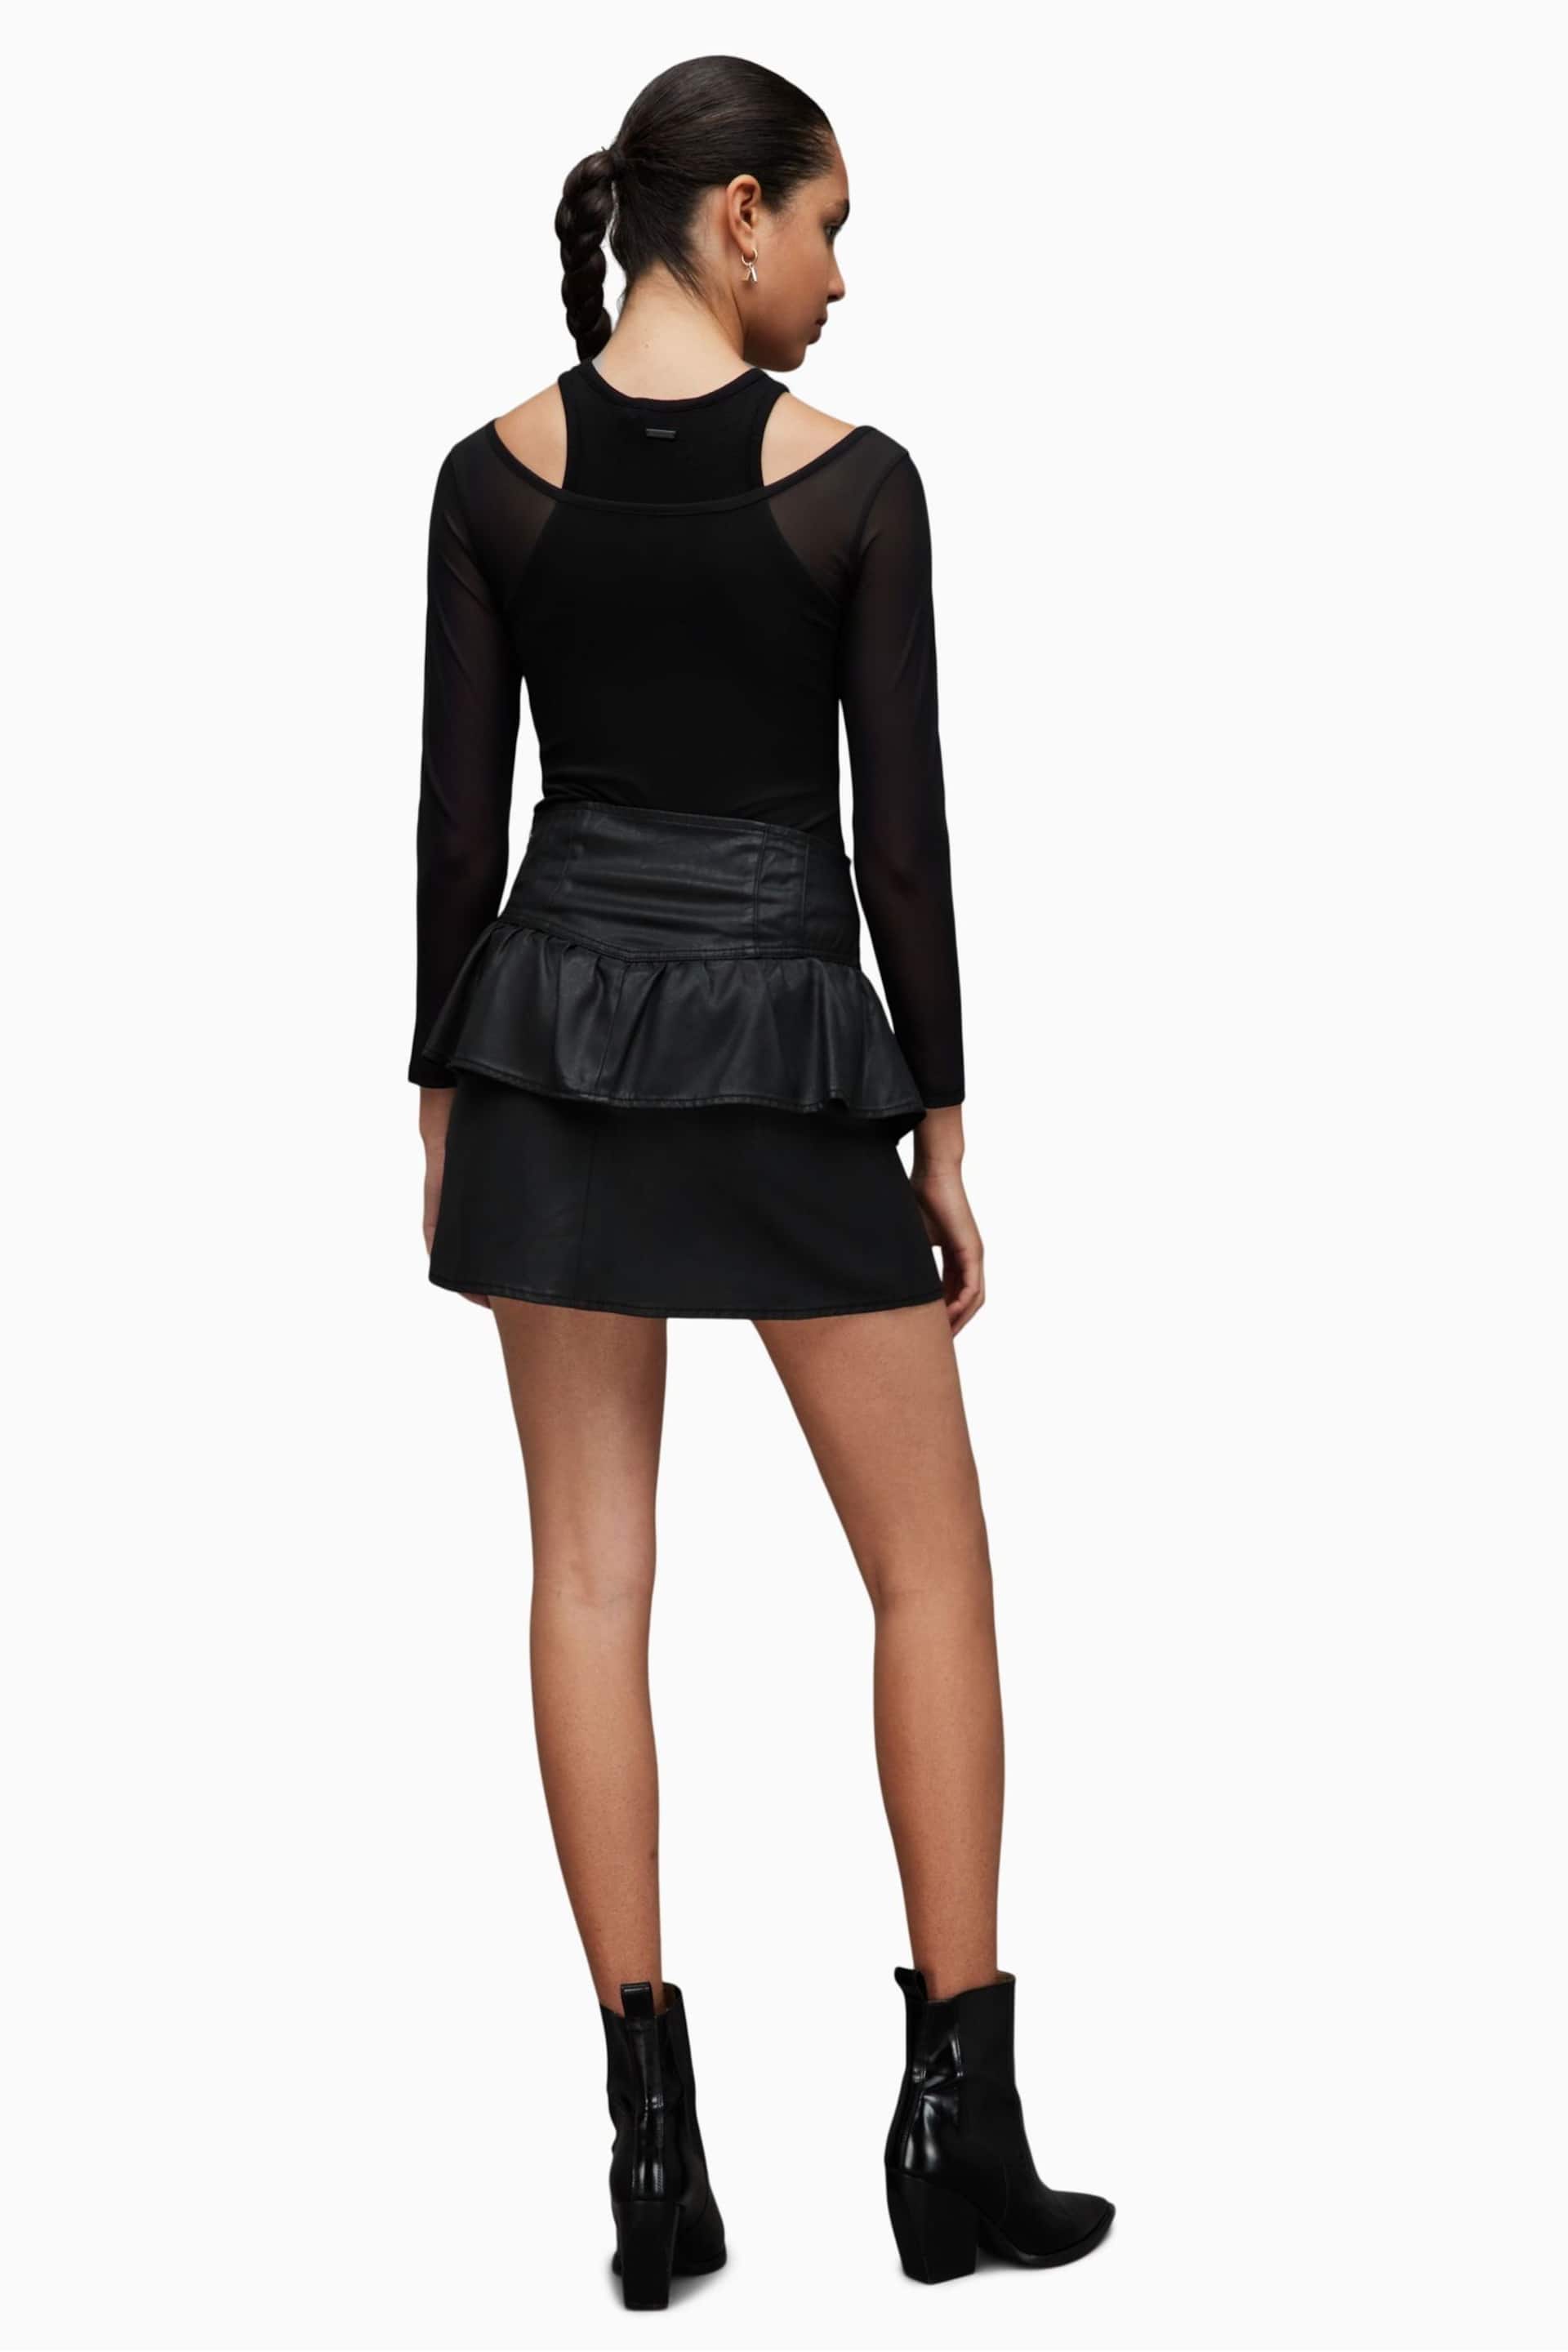 AllSaints Black Andy Coated Denim Skirt - Image 2 of 6